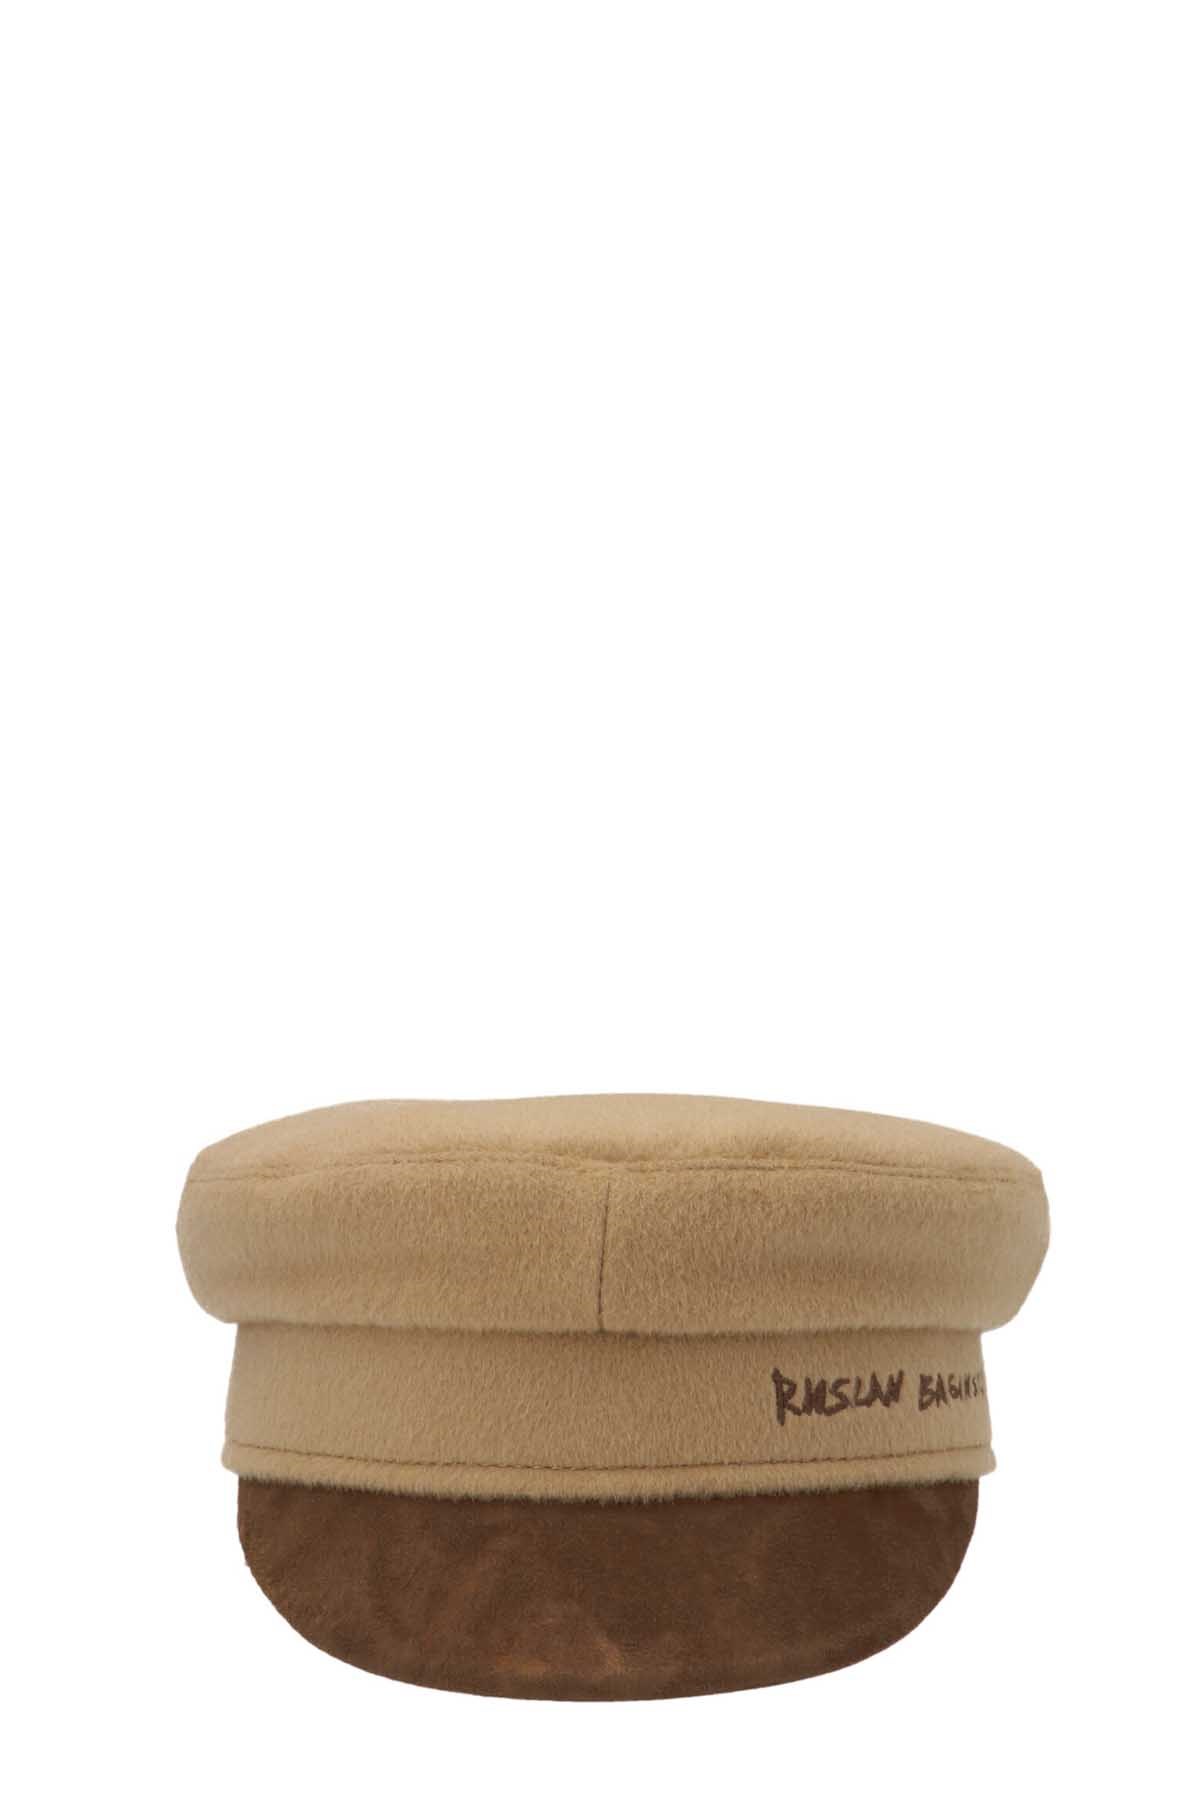 RUSLAN BAGINSKIY Baker Boy Logo Embroidery Hat